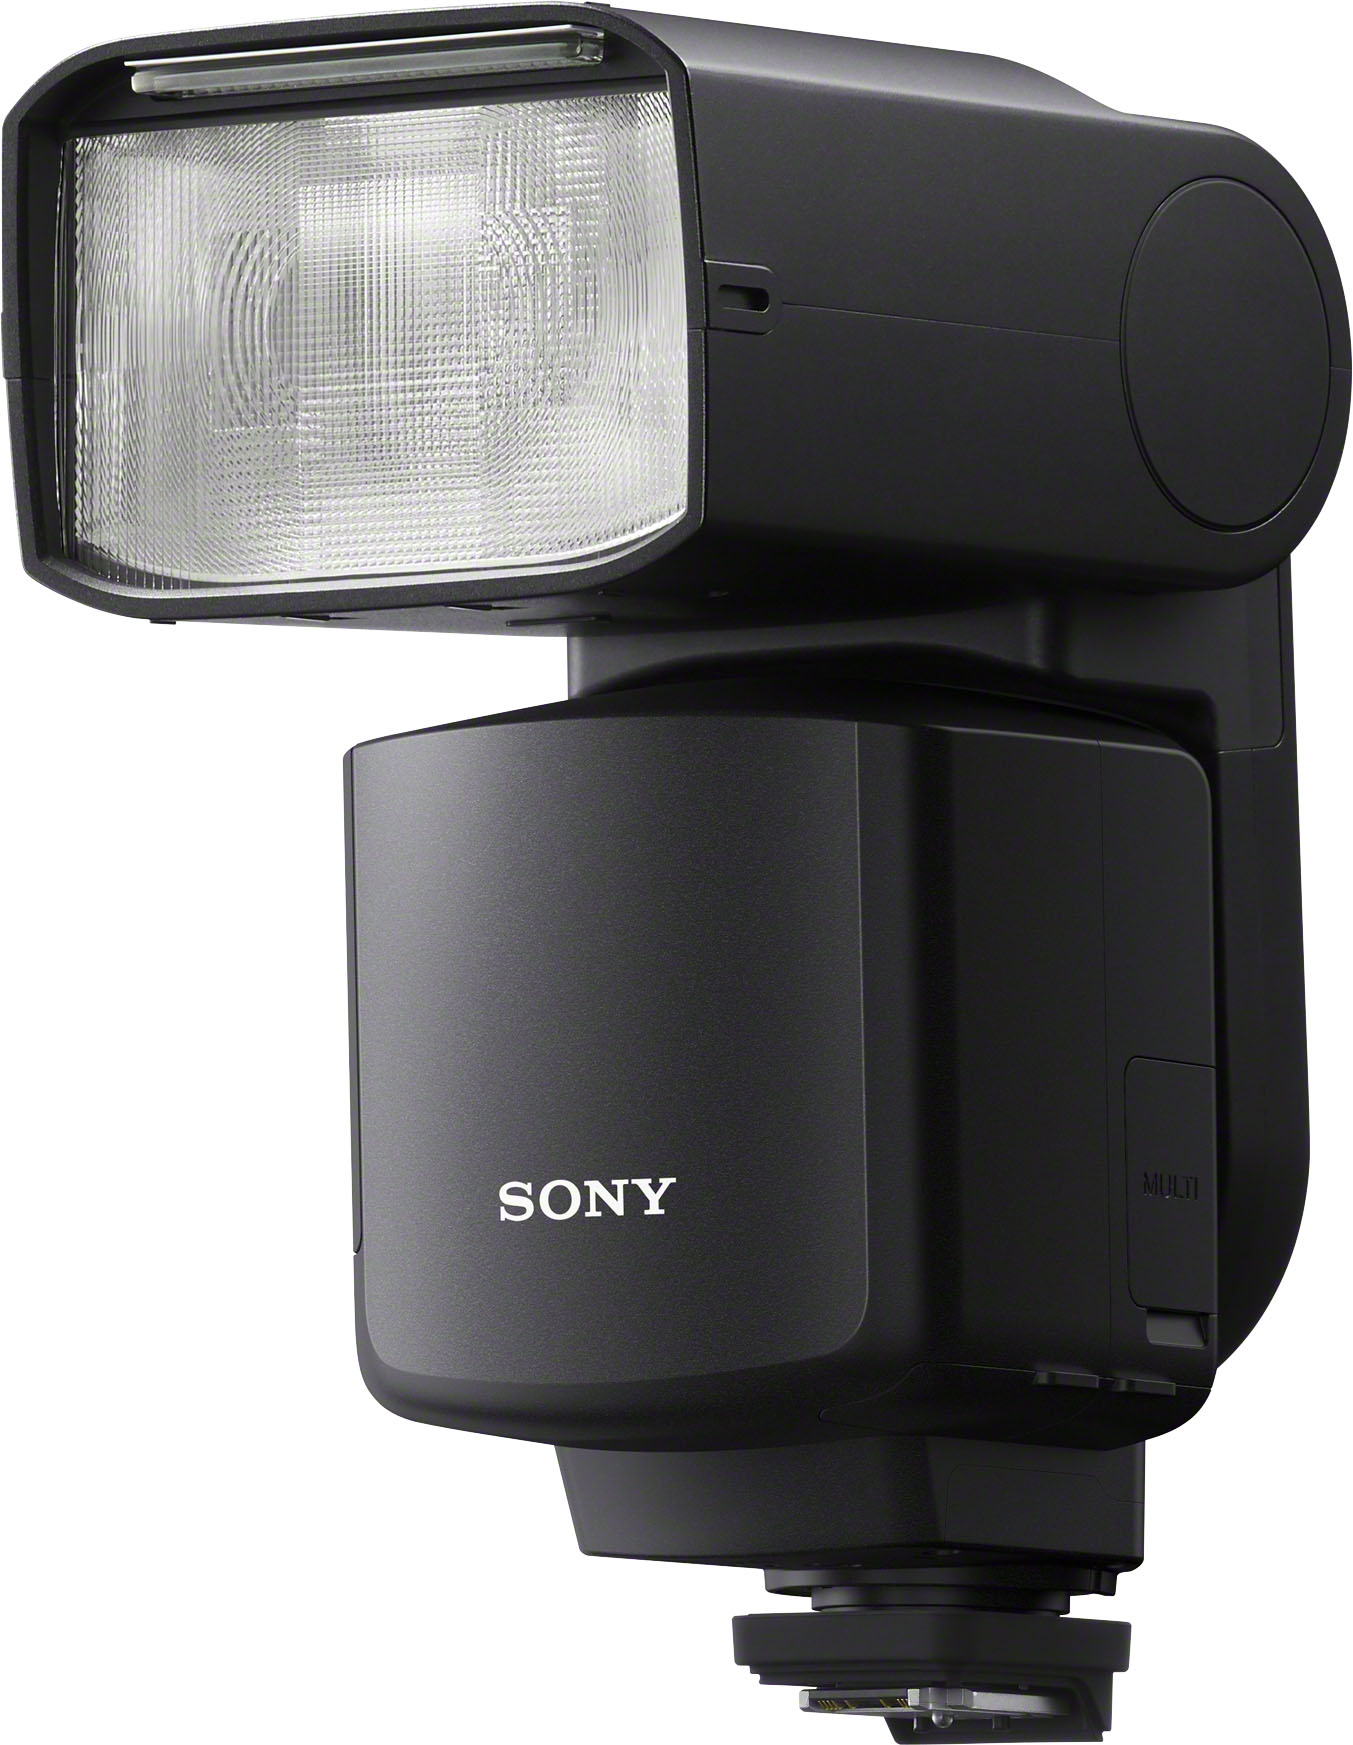 Angle View: Sony - HVL-F60RM2 Wireless Radio Flash